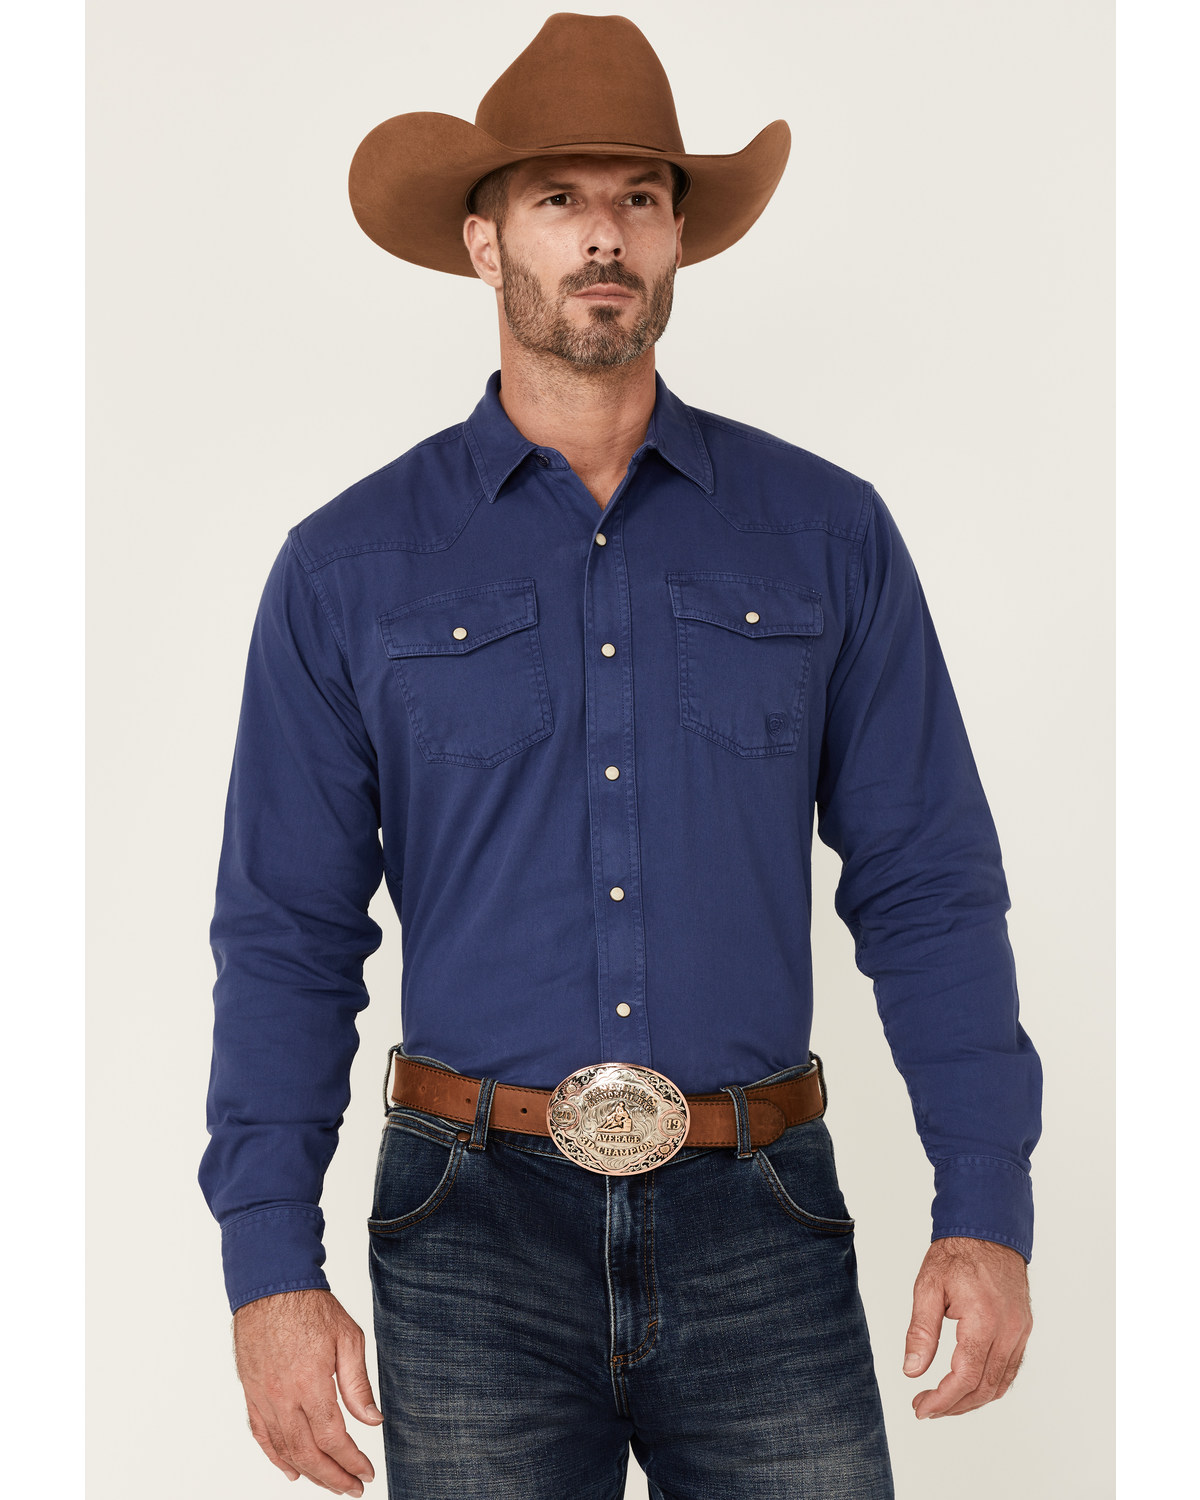 Ariat Men's Solid Teal Jurlington Retro Long Sleeve Pearl Snap Western Shirt